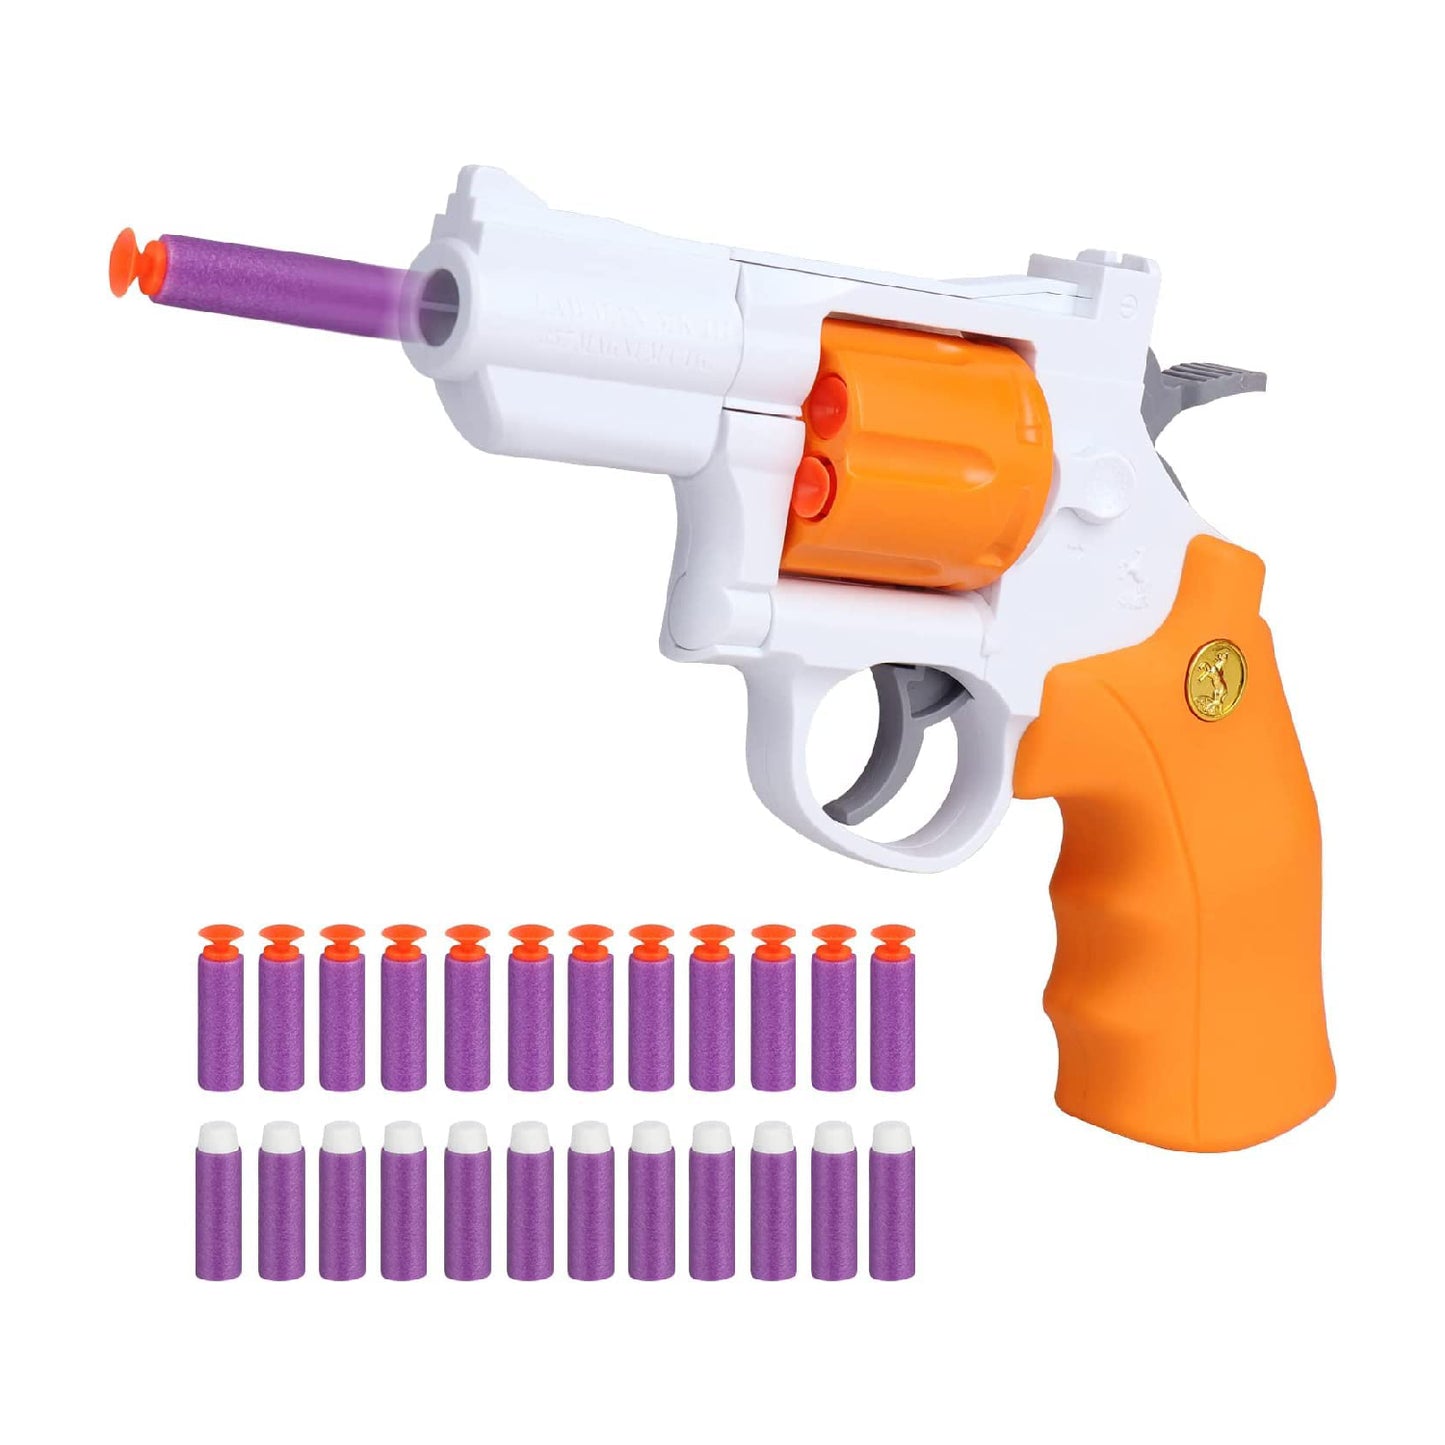 Soft Bullet Toy Guns Cool Toy, Safe Foam Bullets Darts, Education Toy